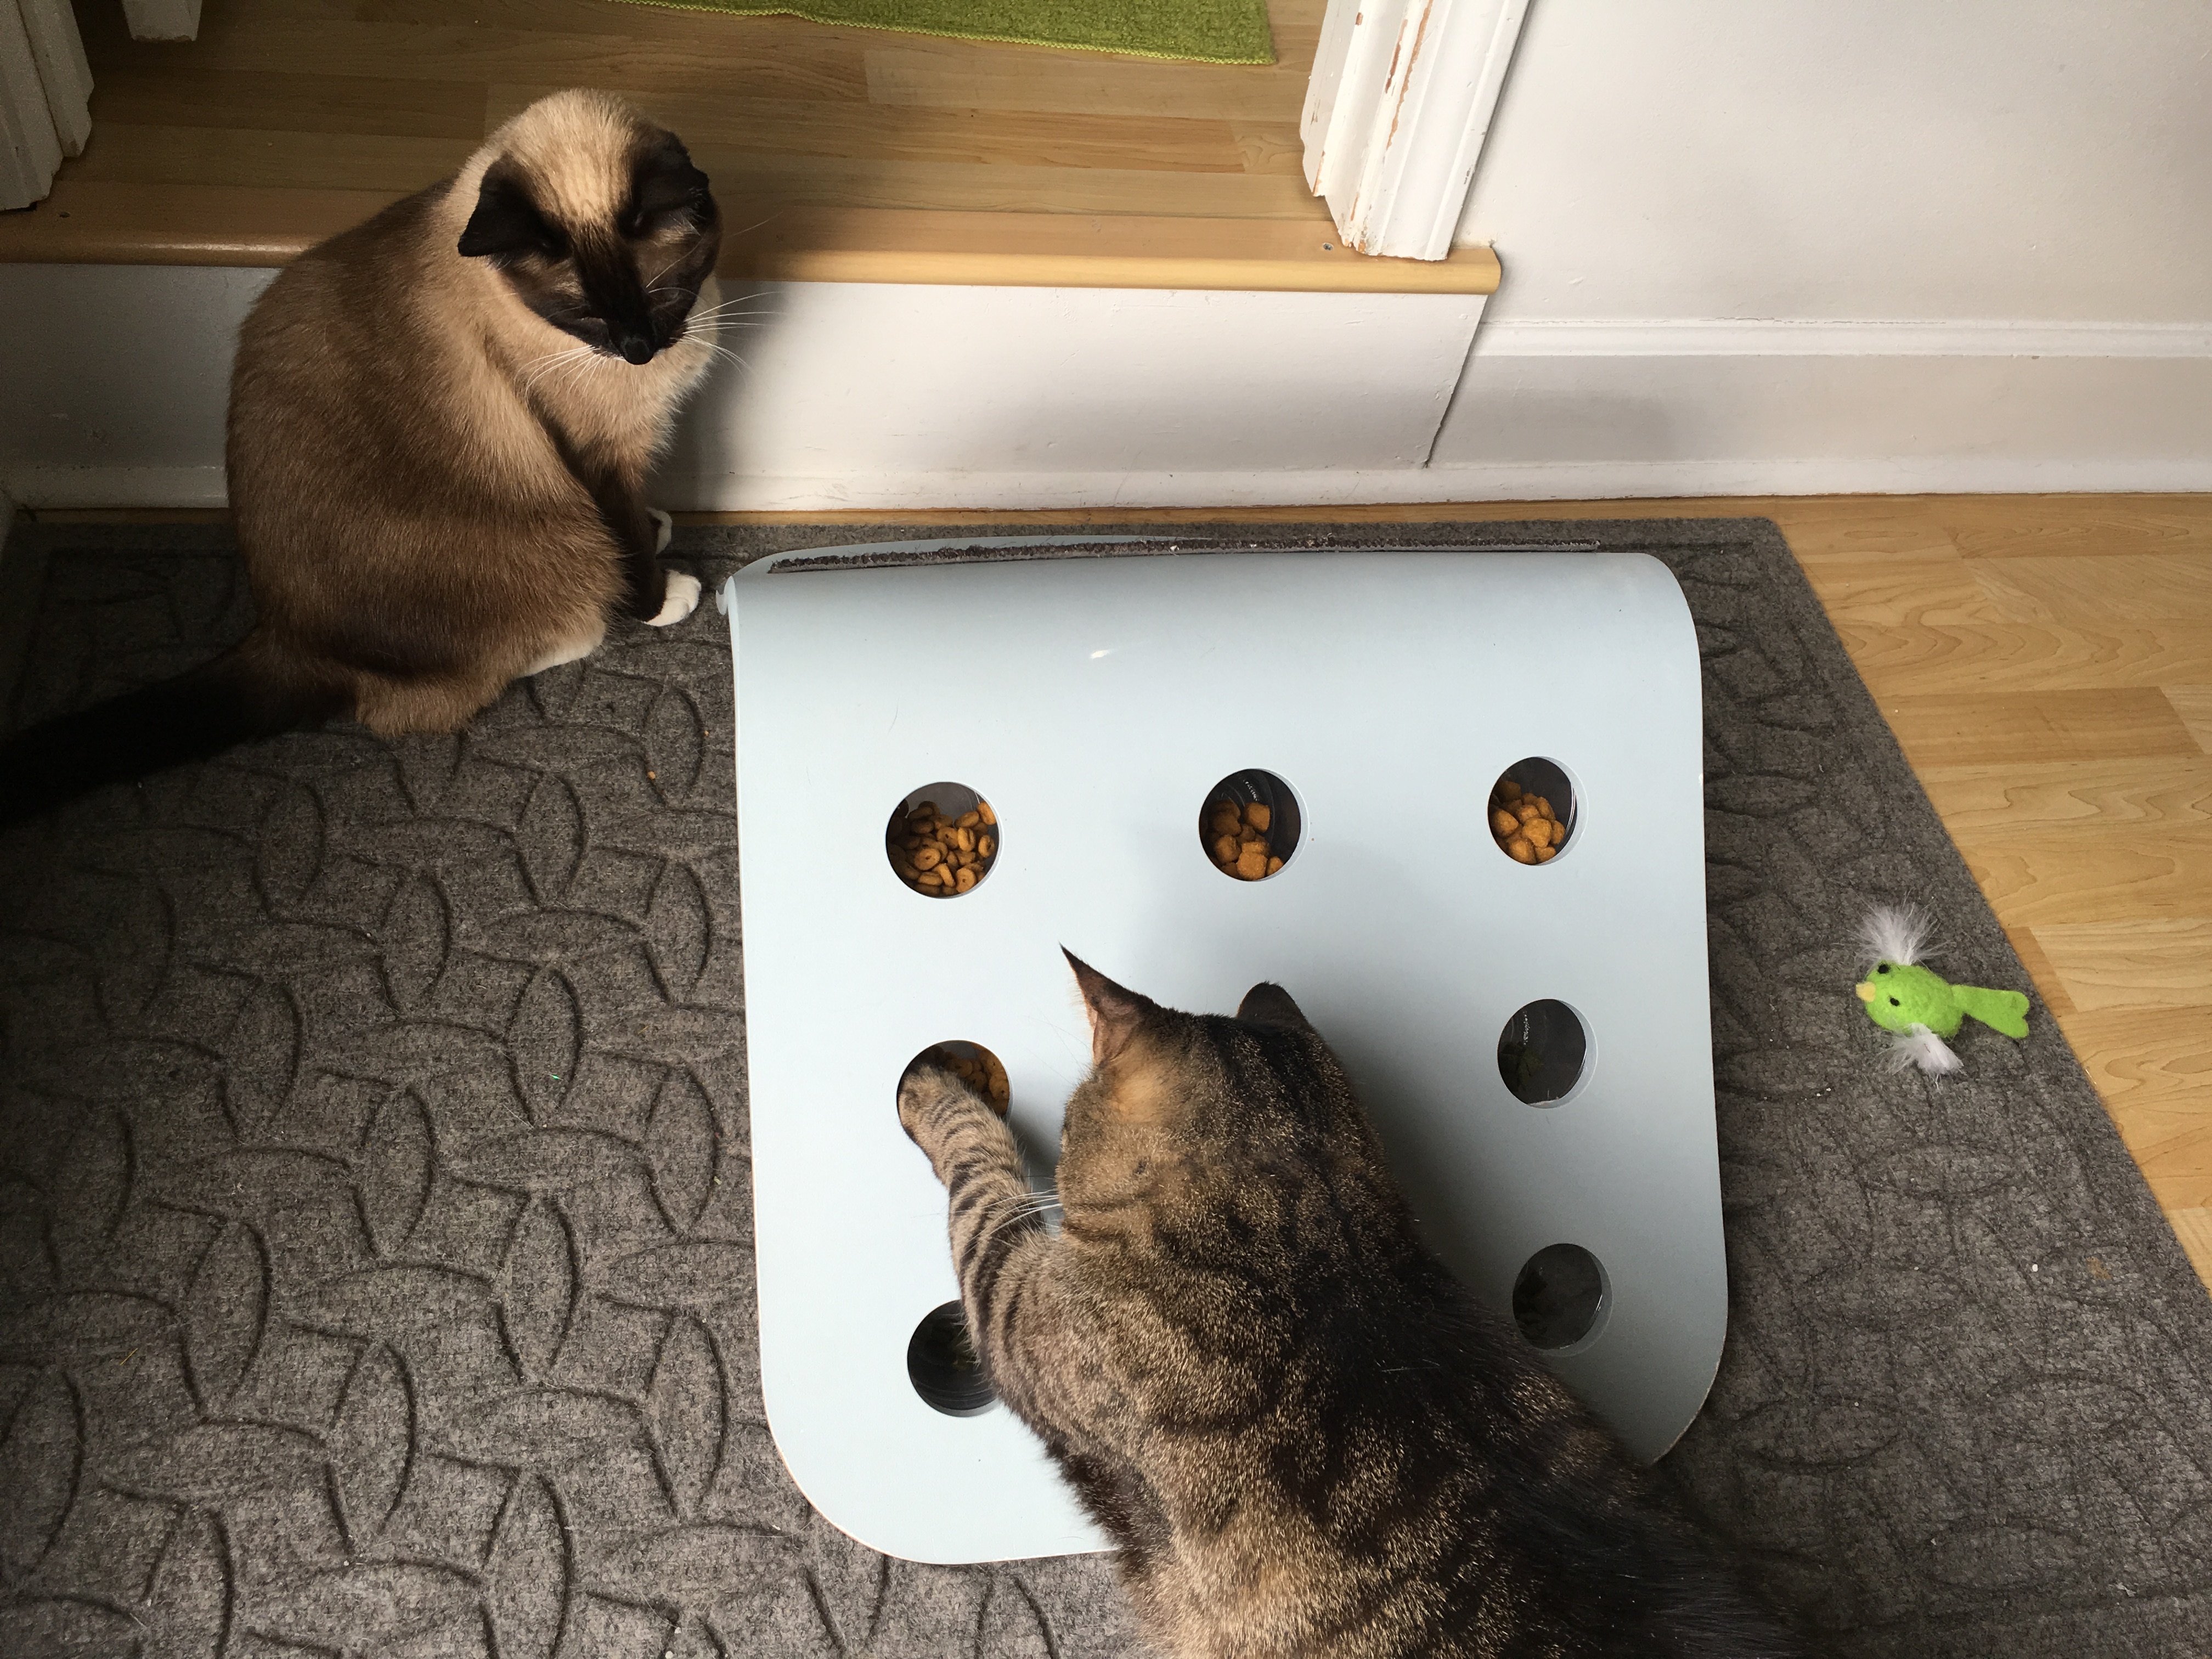 Cat food puzzles